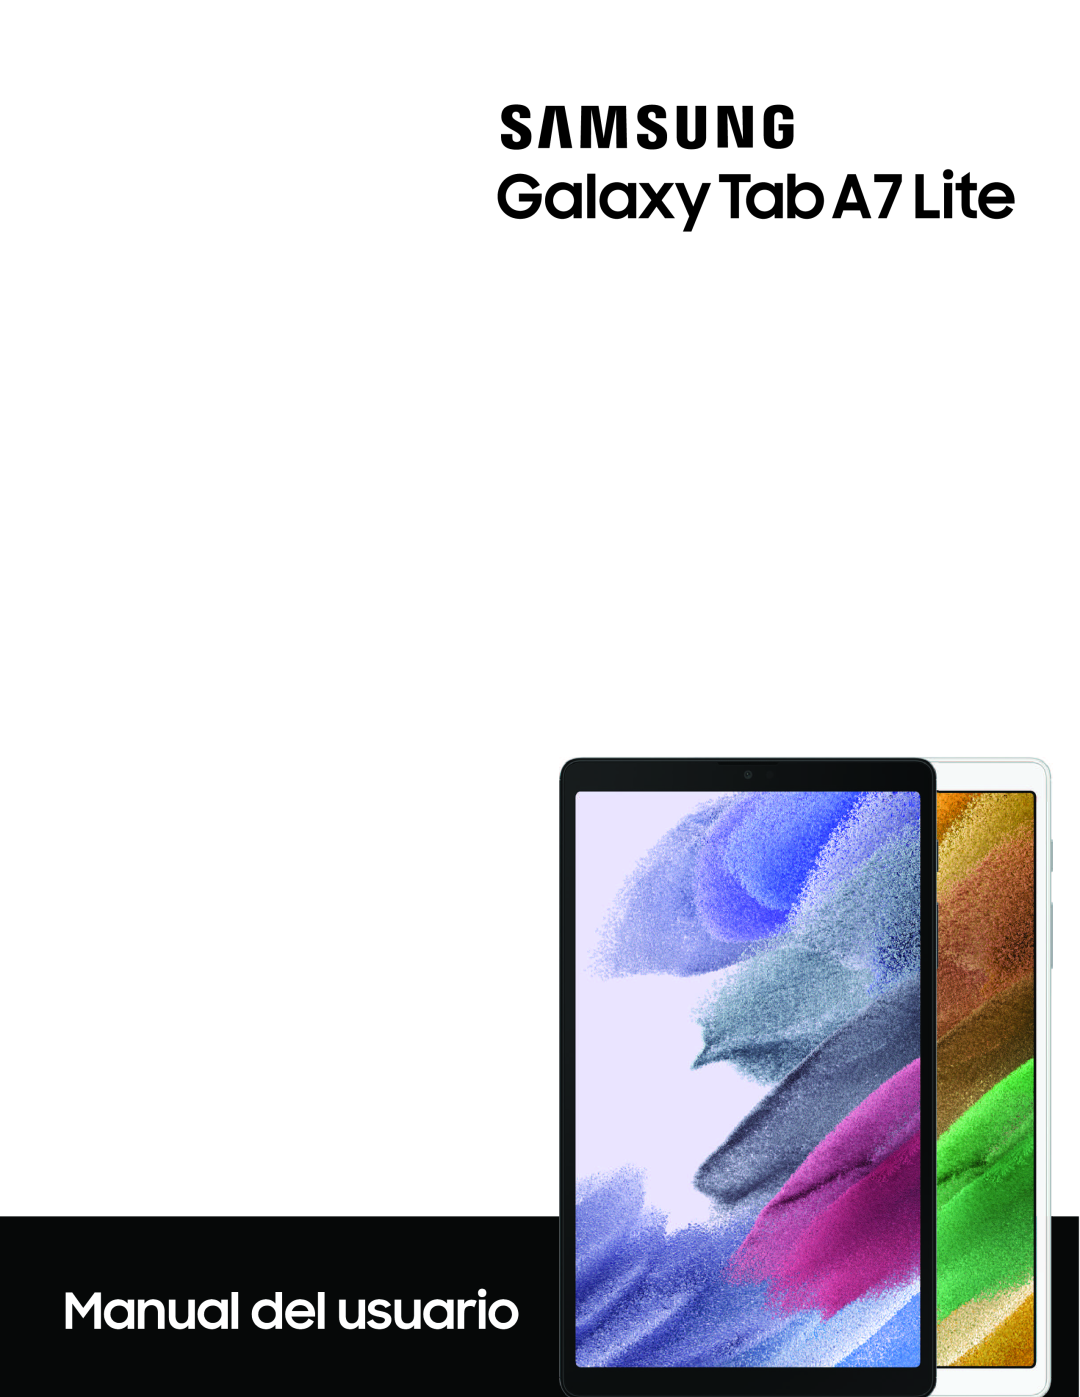 Galaxy Tab A7 Lite Spectrum Mobile